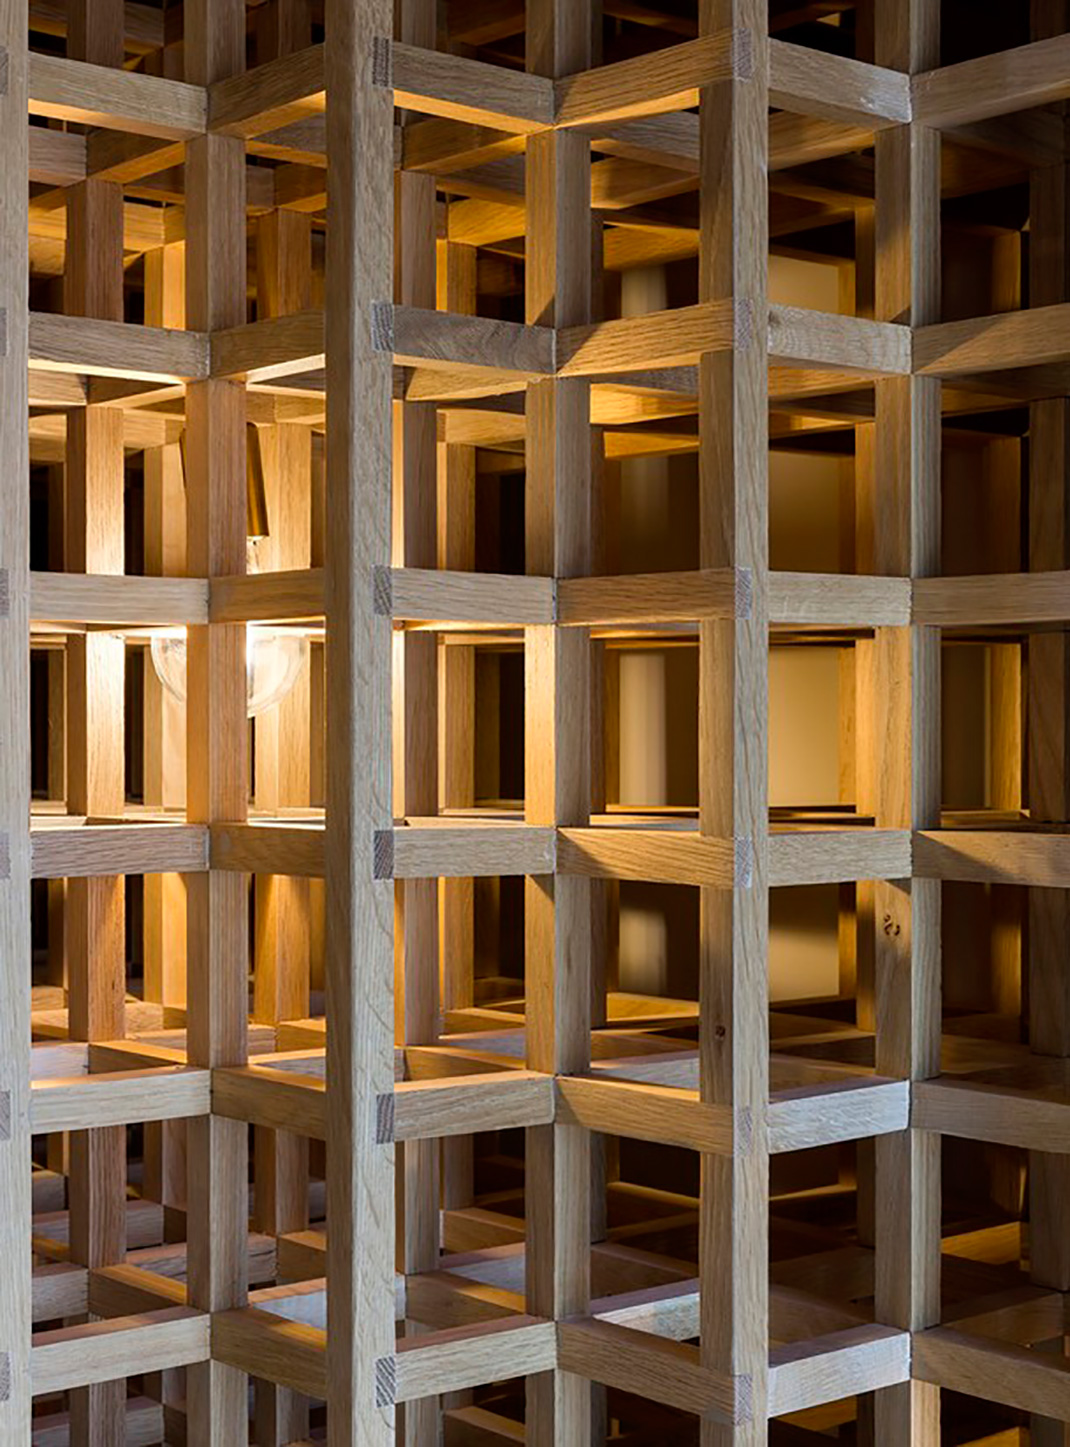 kosushi寿司餐厅 美国 寿司 日本料理 木结构 装置 阵列 餐厅LOGO VI设计 空间设计 视觉餐饮